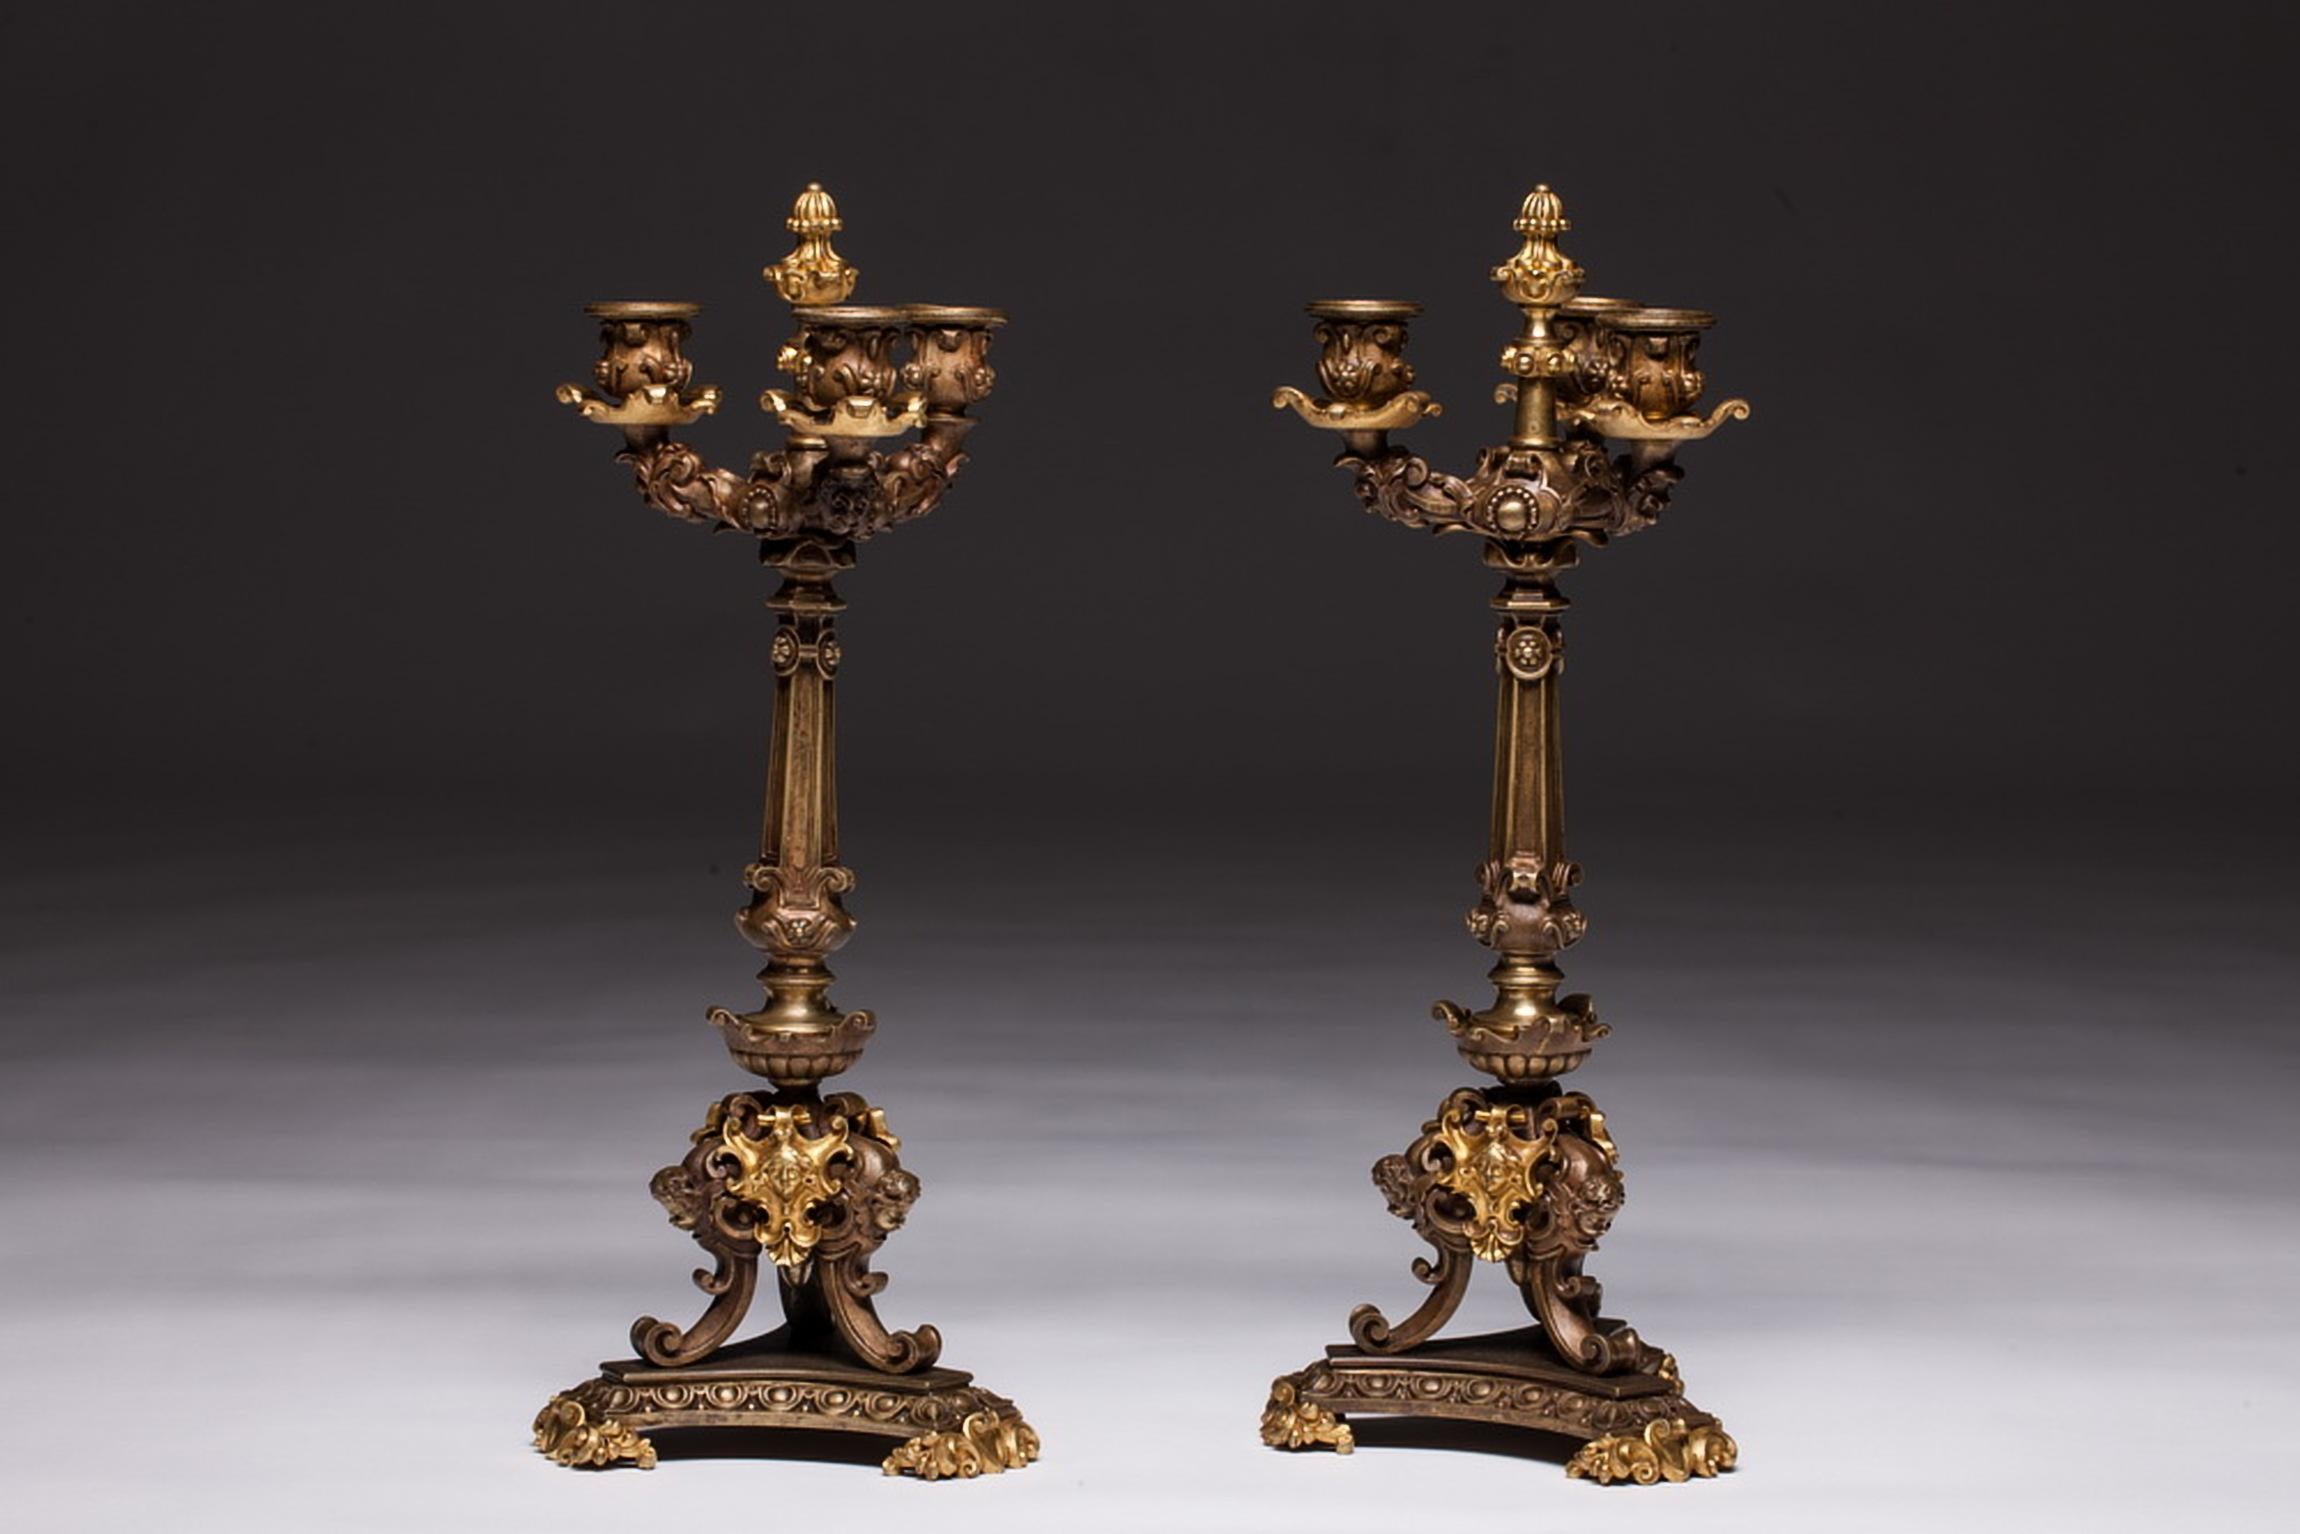 Patinated 19th Century French Empire Gilt Doré Bronze Empire Candelabras a Pair For Sale